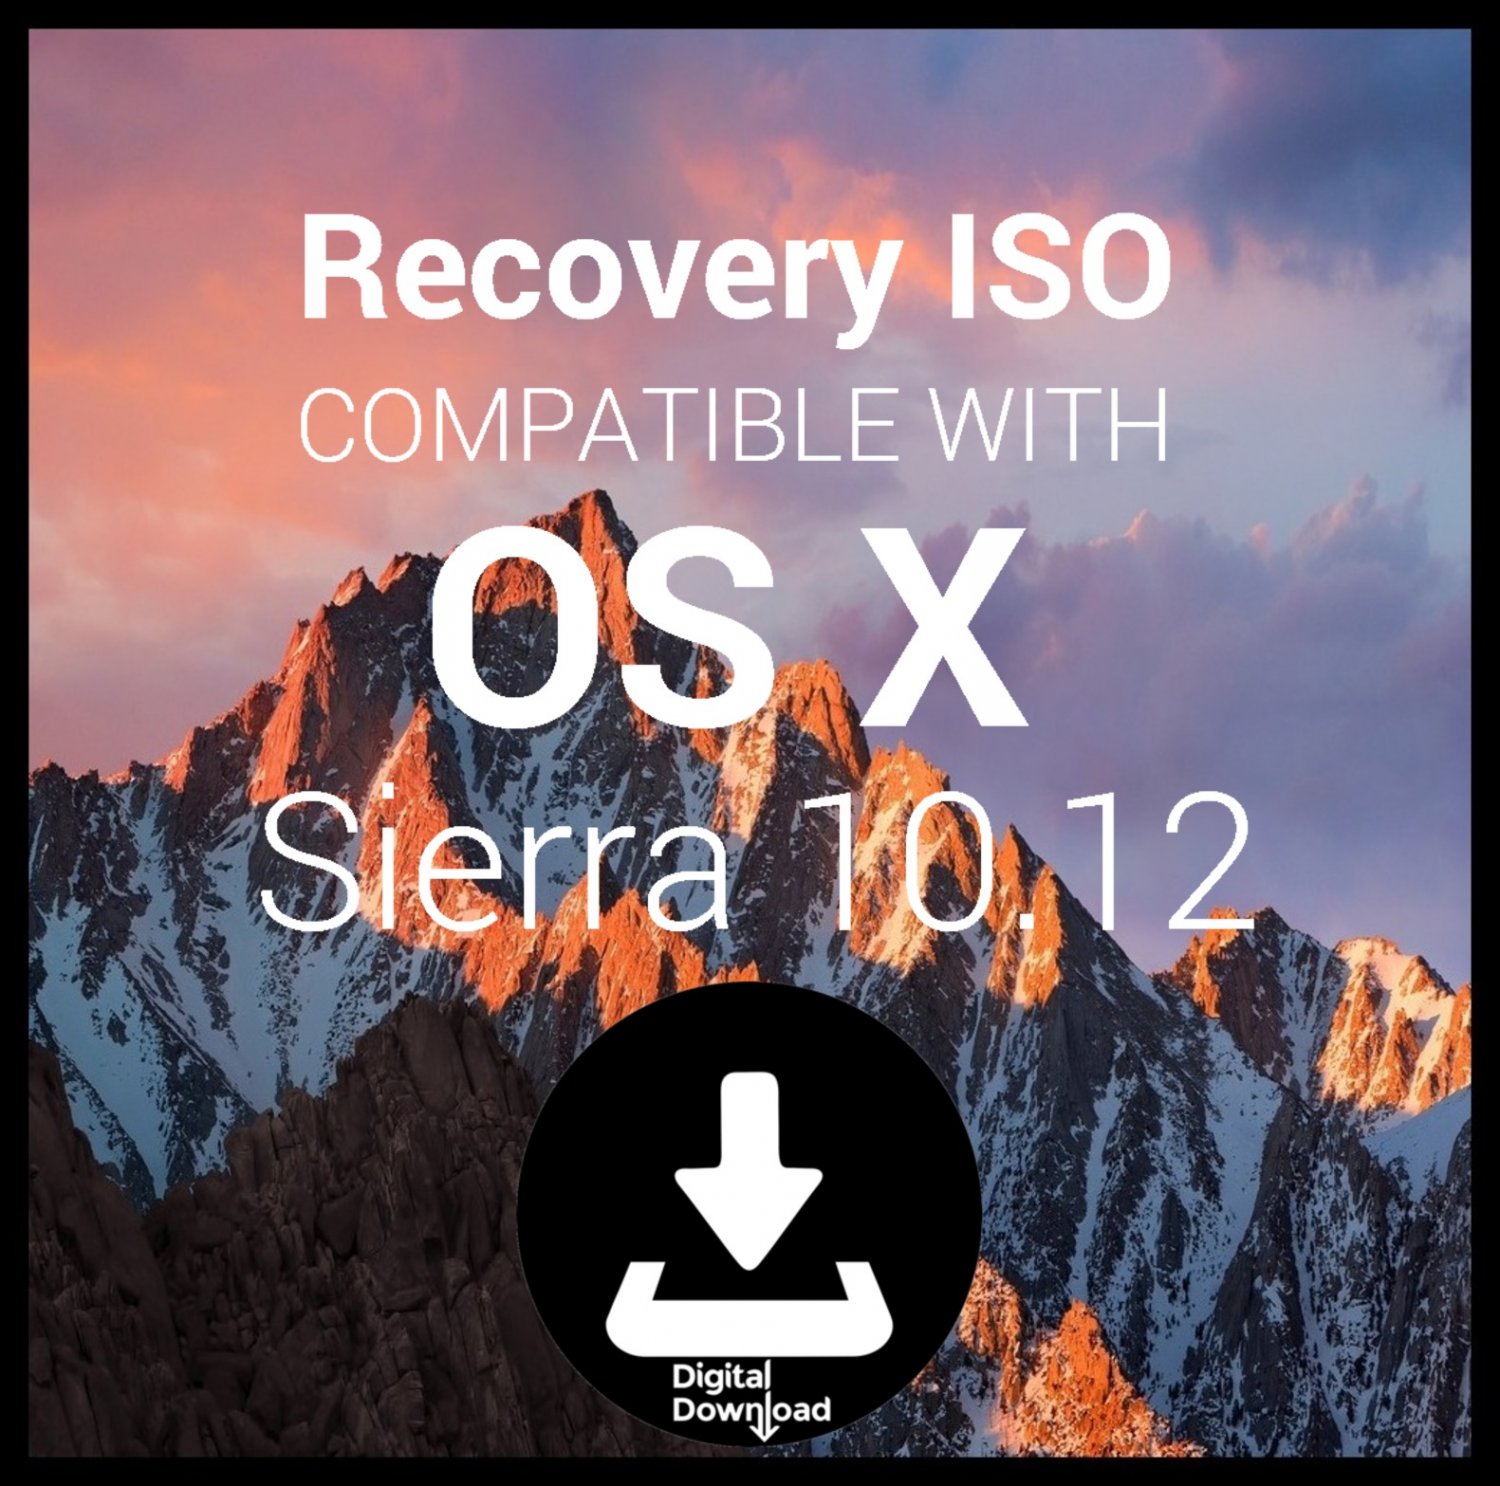 os sierra 10.12 download